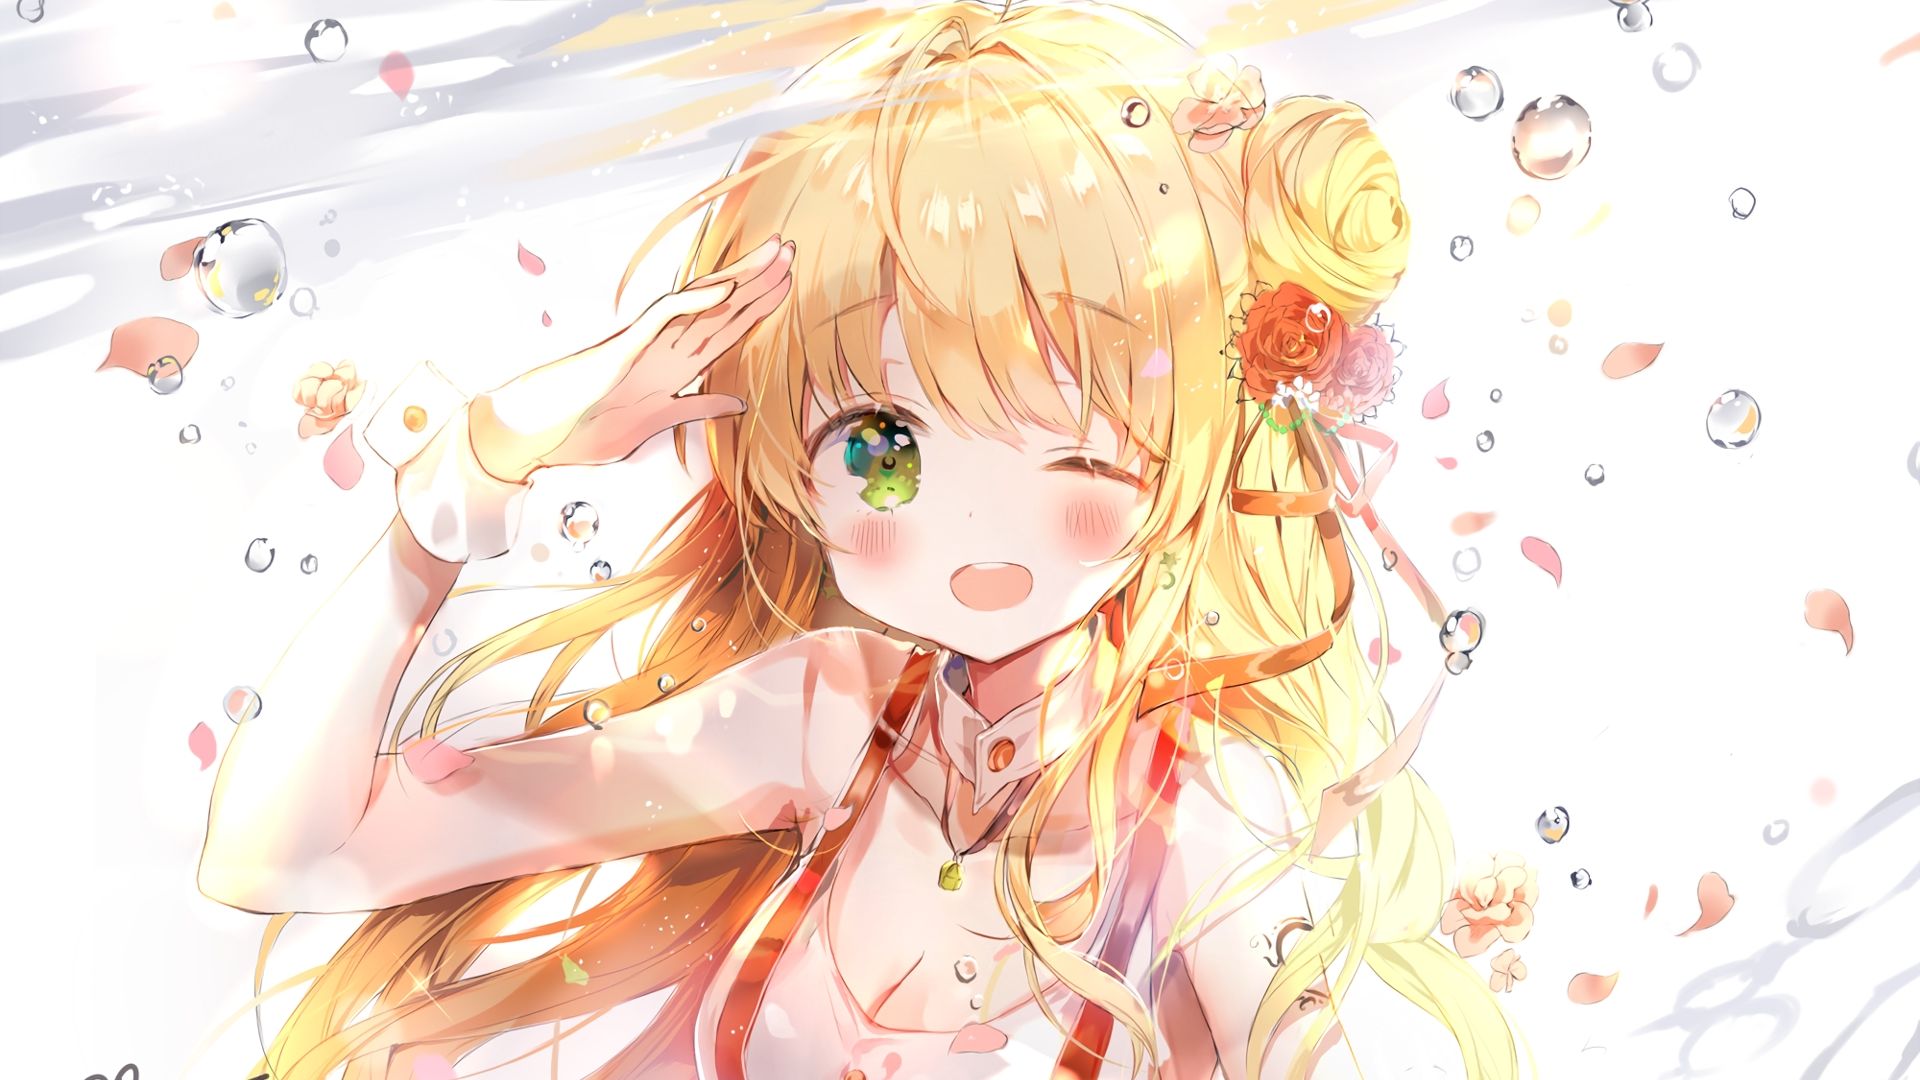 Anime girl winking by mysterionz on DeviantArt